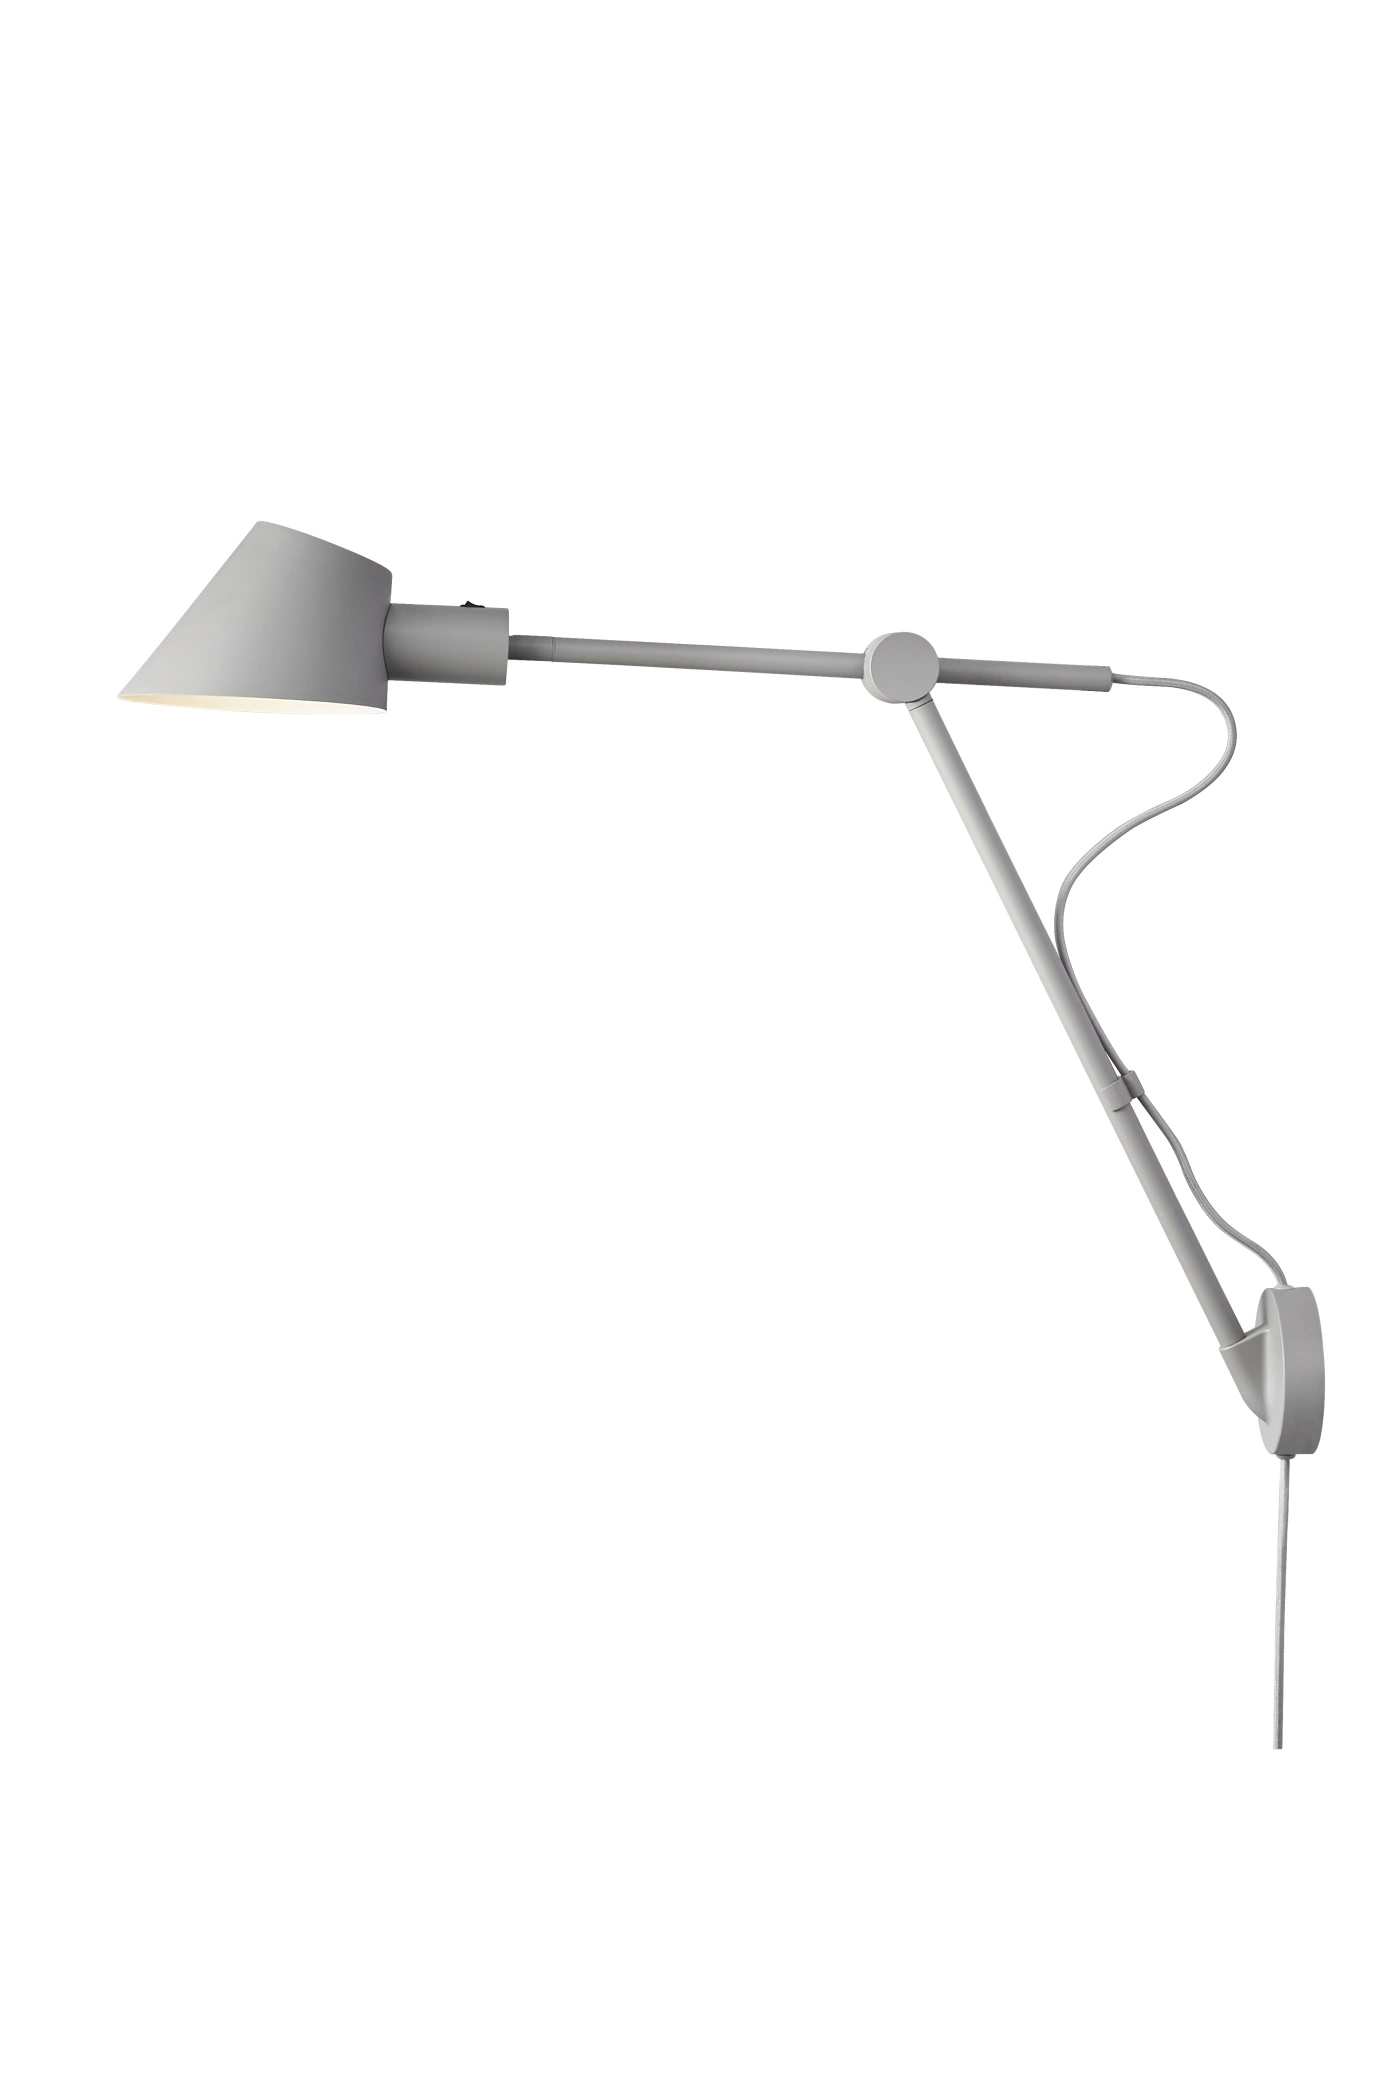   
                        
                        Бра NORDLUX (Дания) 59640    
                         в стиле Хай-тек.  
                        Тип источника света: светодиодная лампа, сменная.                                                 Цвета плафонов и подвесок: Серый.                         Материал: Металл.                          фото 2